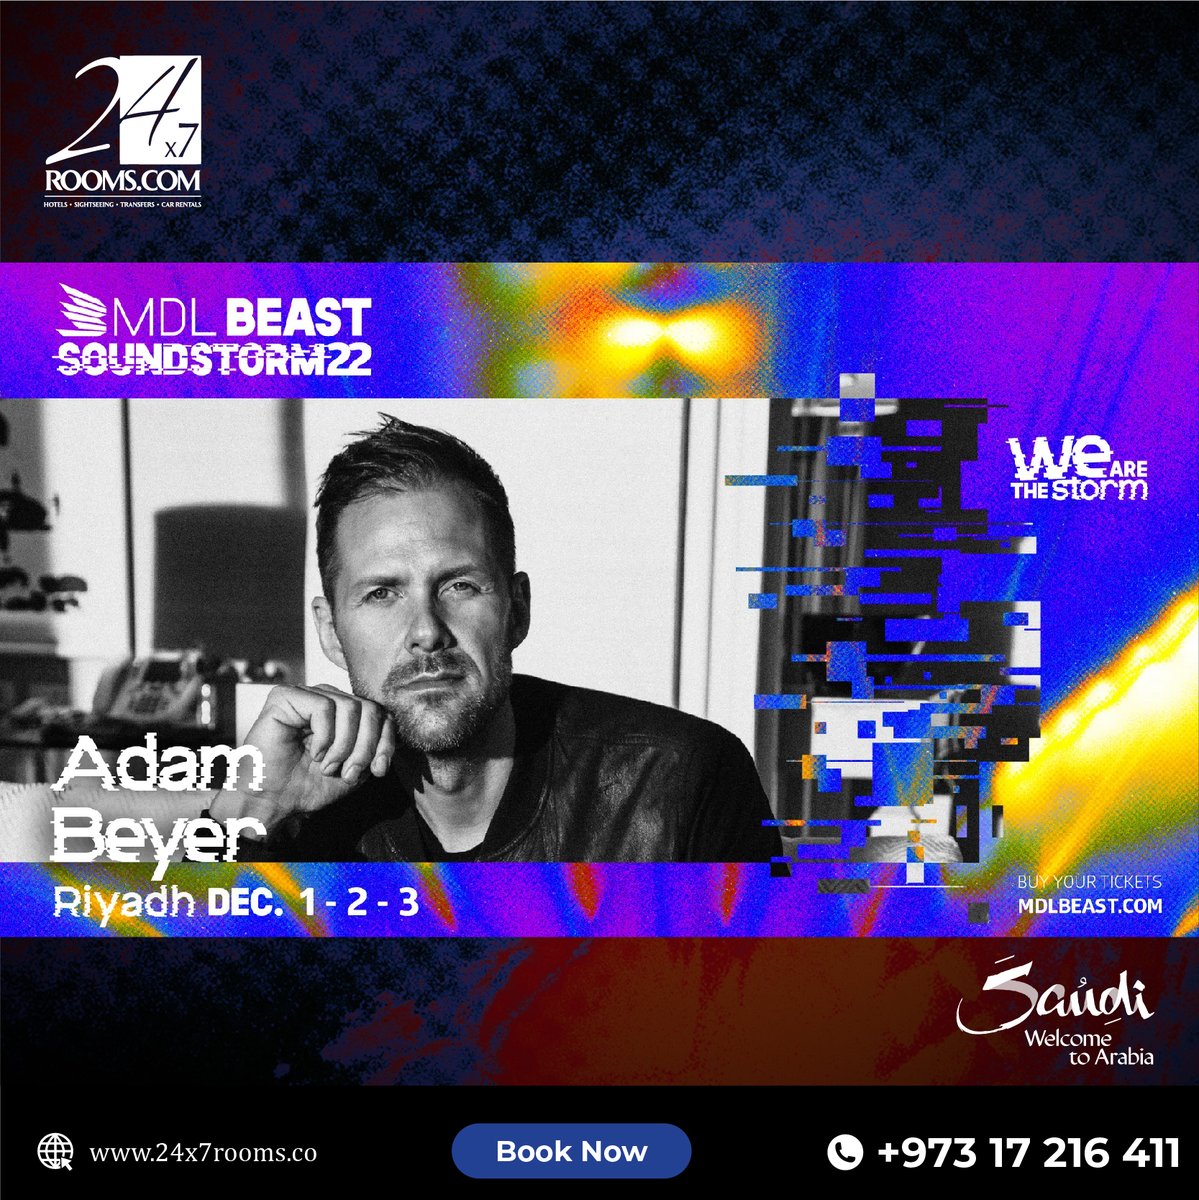 Everyone’s favourite DJ, Adam Beyer will be present at MDL BEAST SOUNDSTORM in Riyadh this December. Book your tickets now
#adambeyer #djadambeyer #edm #musicfestivals #electronicmusicfestival #soundstorm2022 #drumcoderecords #djs #saudiarabia #mdlbeastsoundstorm #livemusic